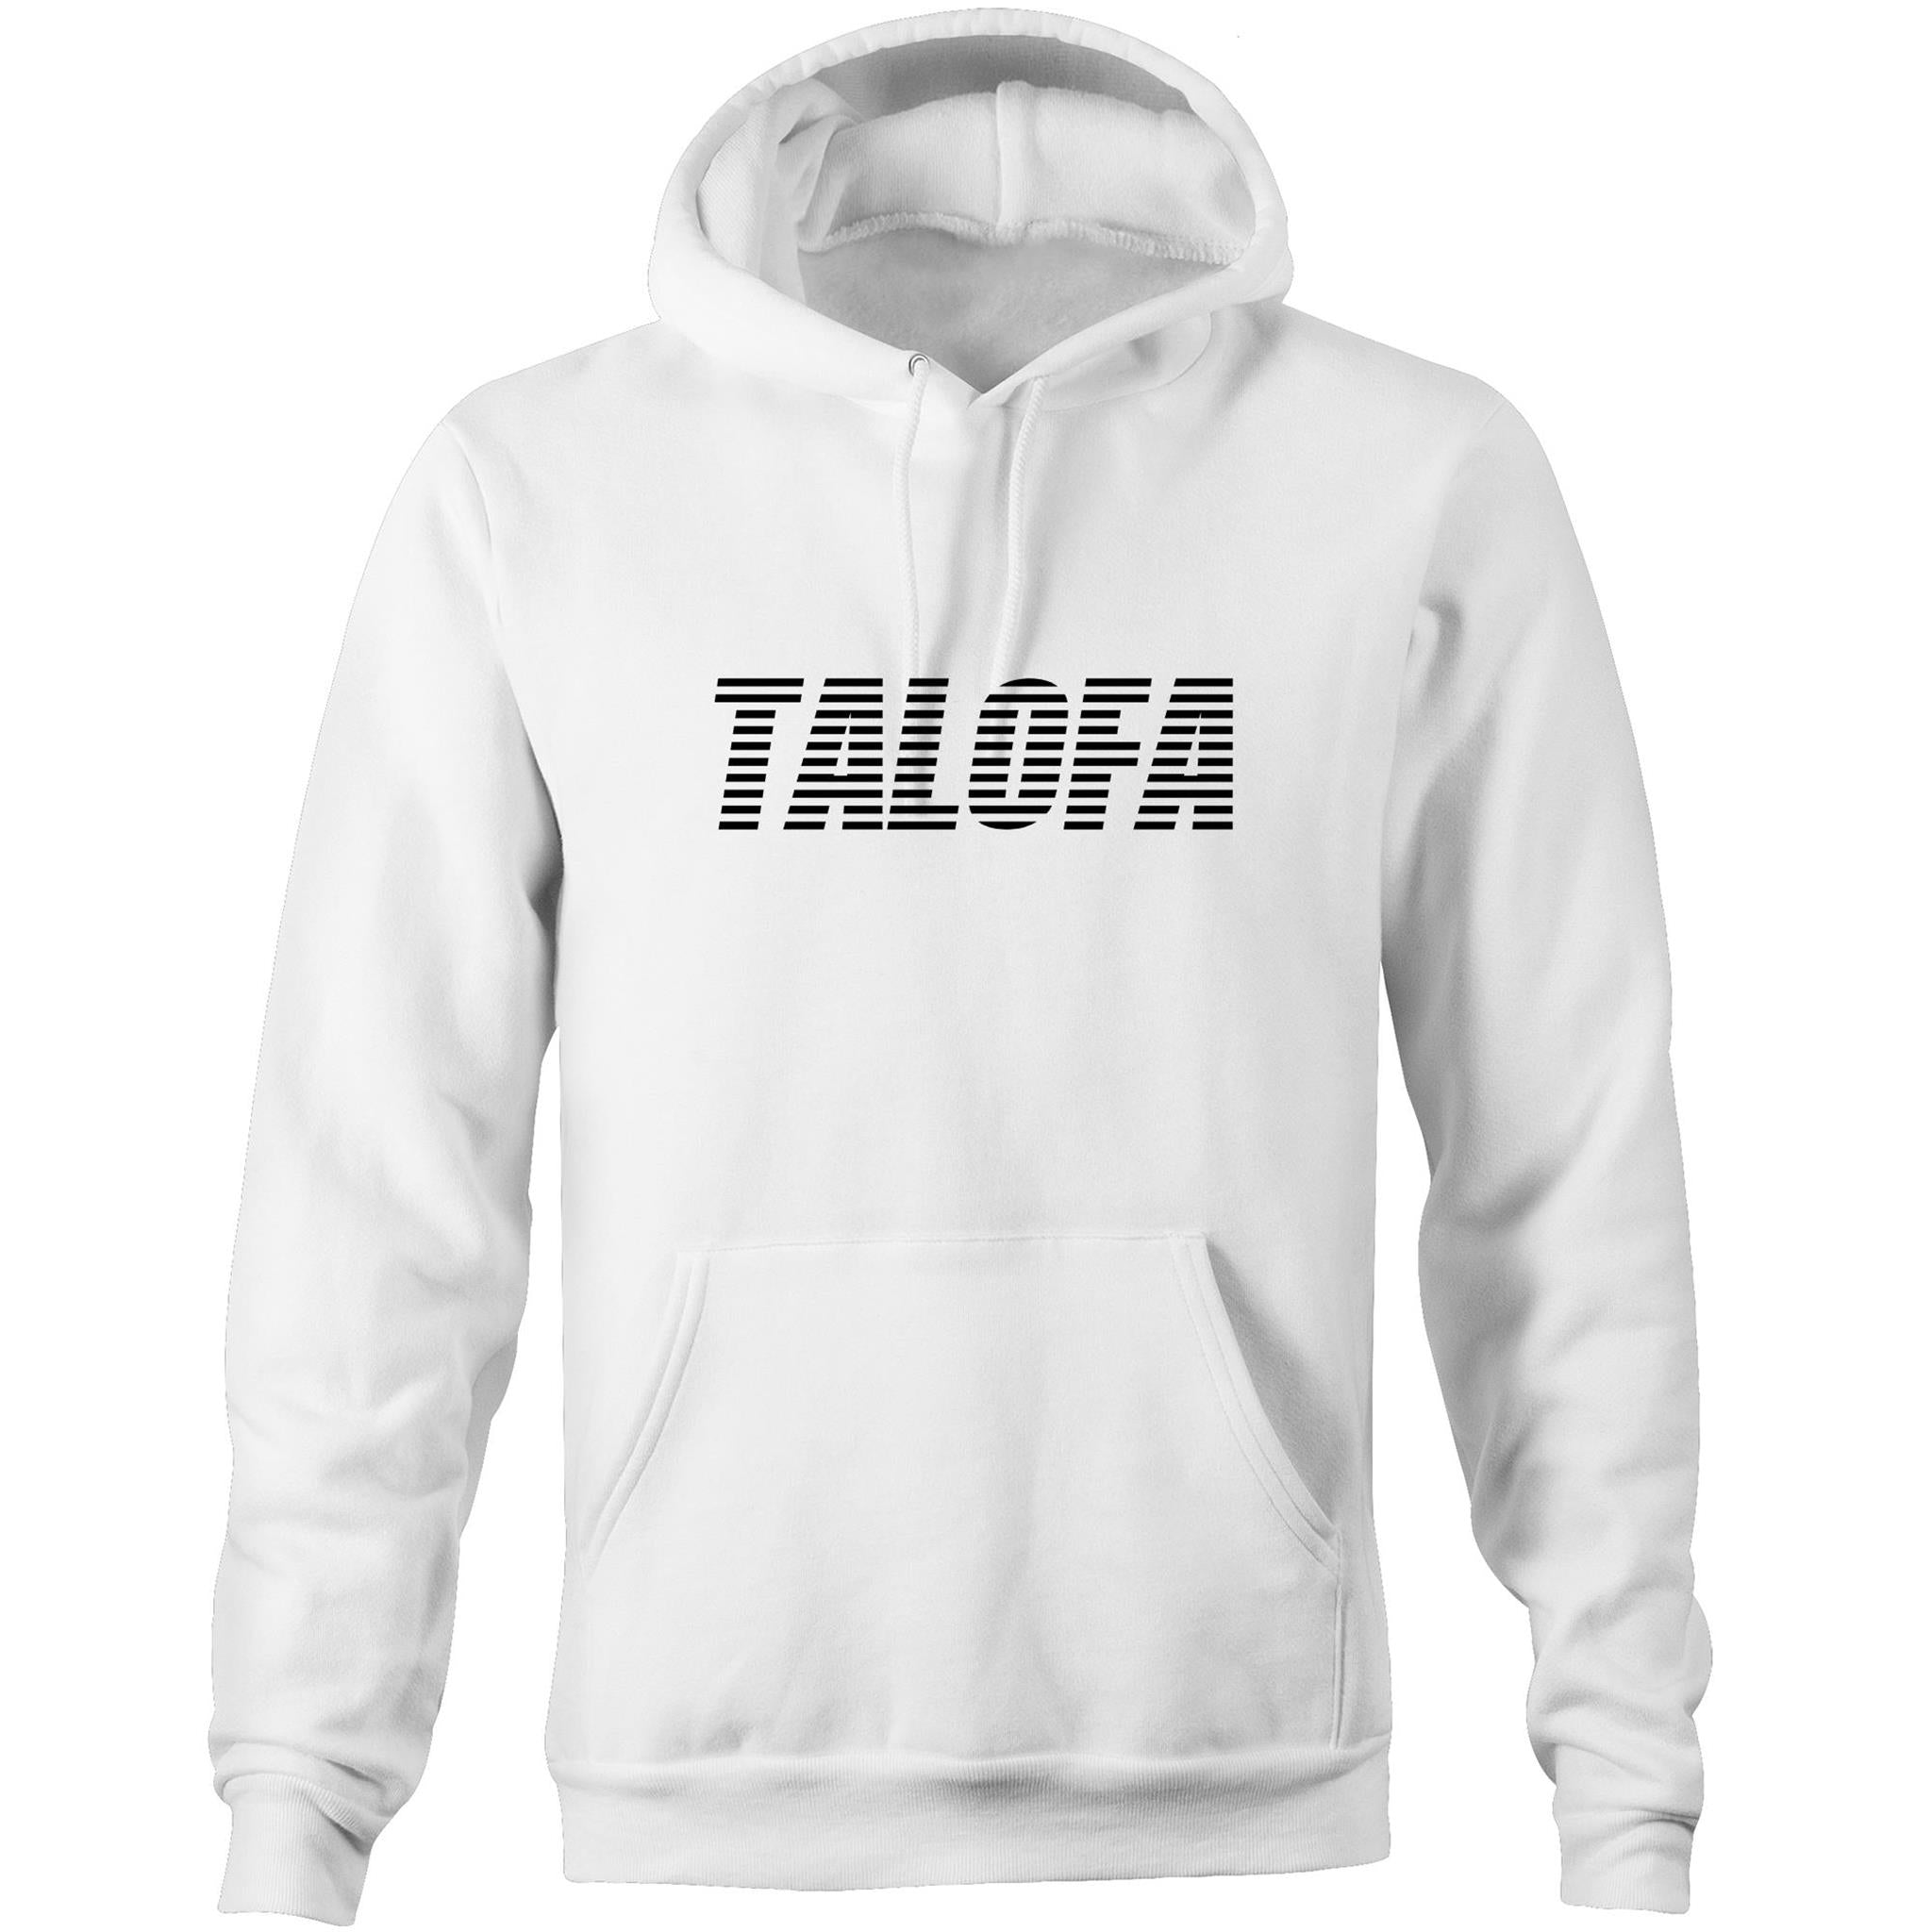 Talofa Pocket Hoodie Sweatshirt - Measina Treasures of Samoa